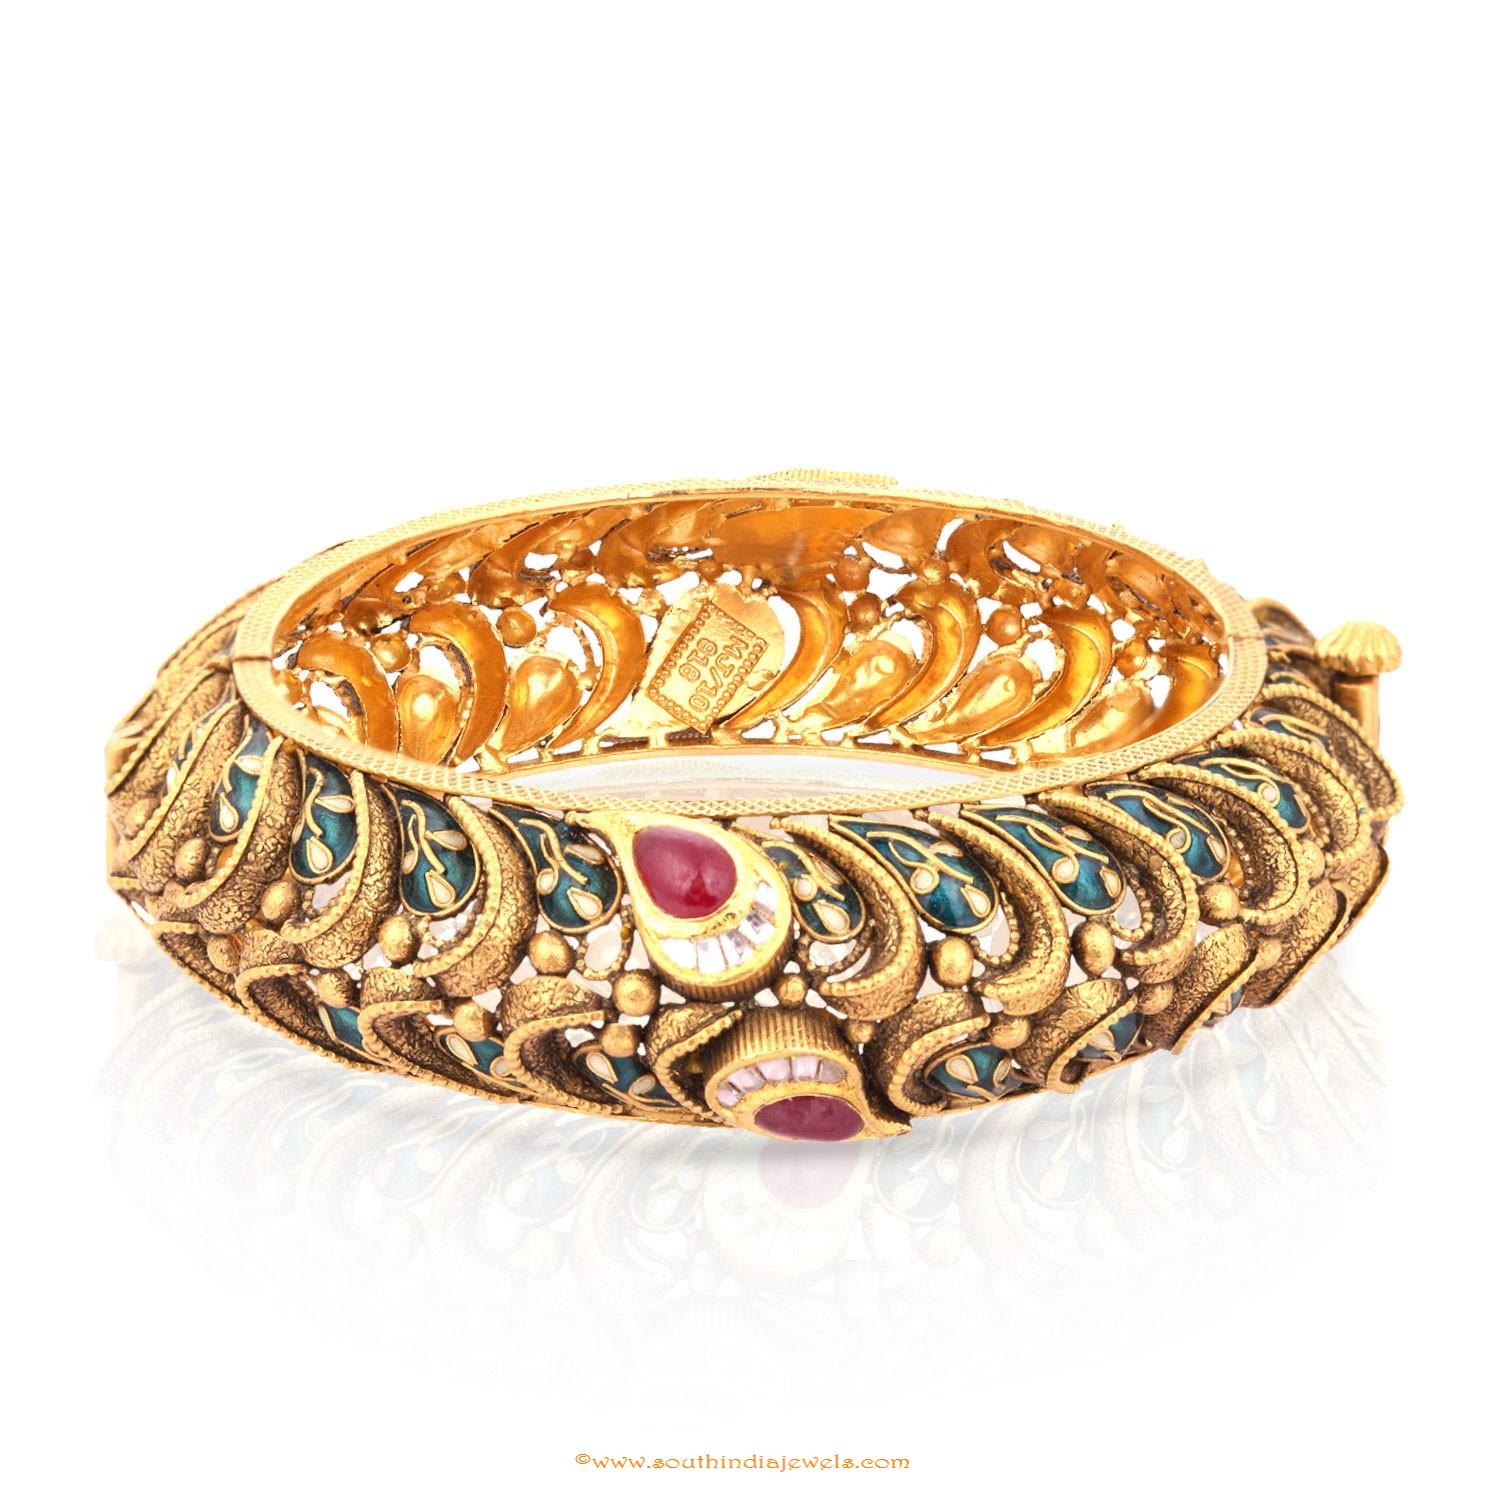 Gold Bangle Design From Malabar Gold & Diamonds ~ South India Jewels